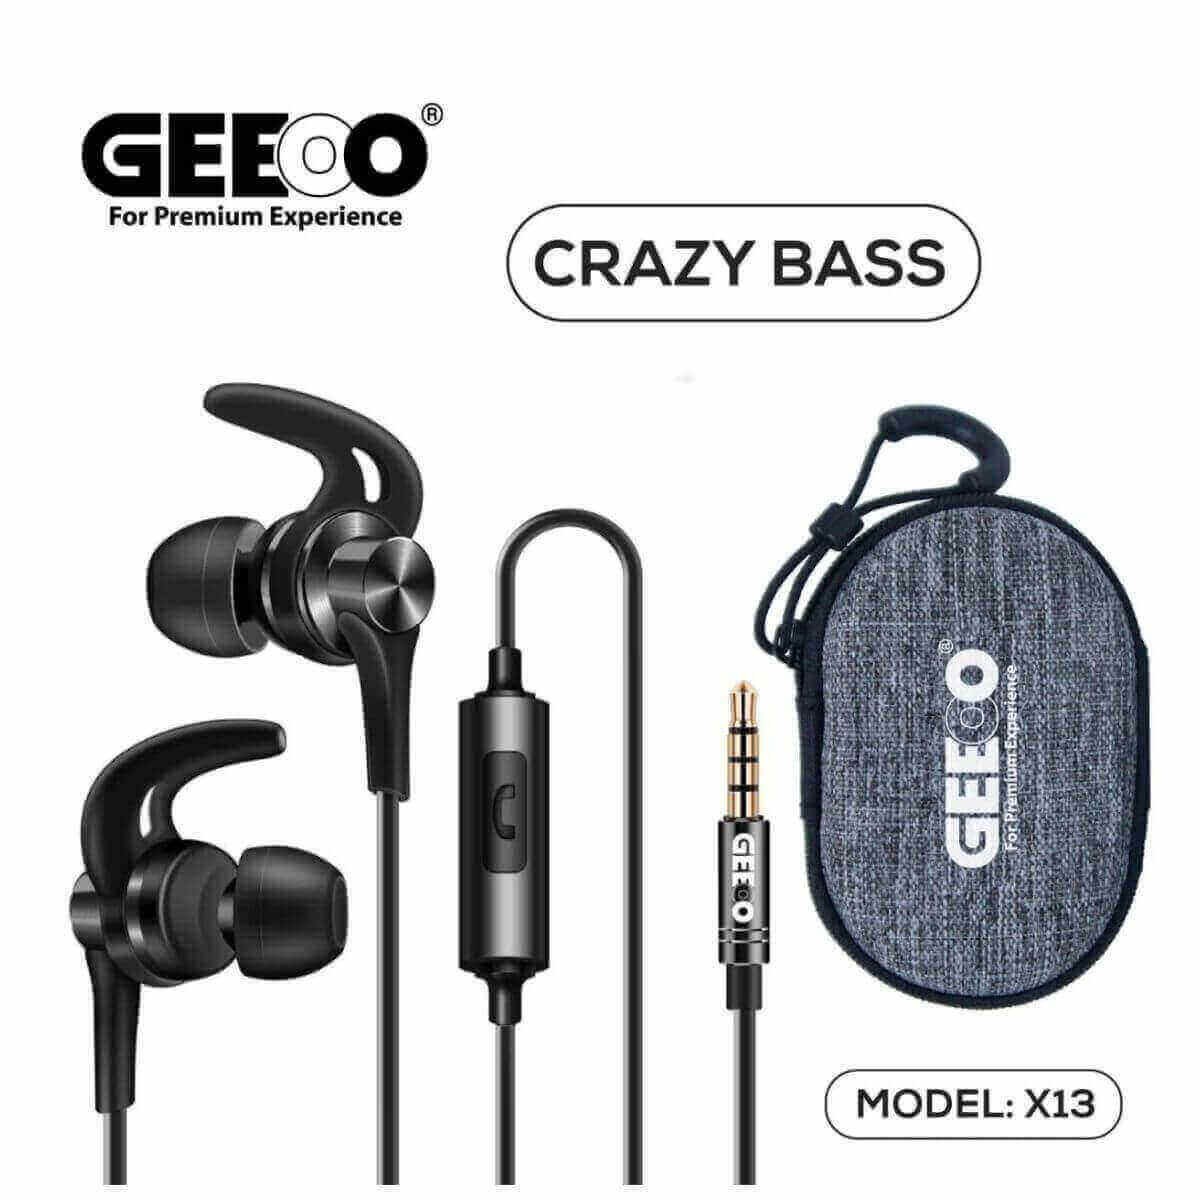 GEEOO X13 Strong Bass IN-EAR EARPHONES With Bag Bd